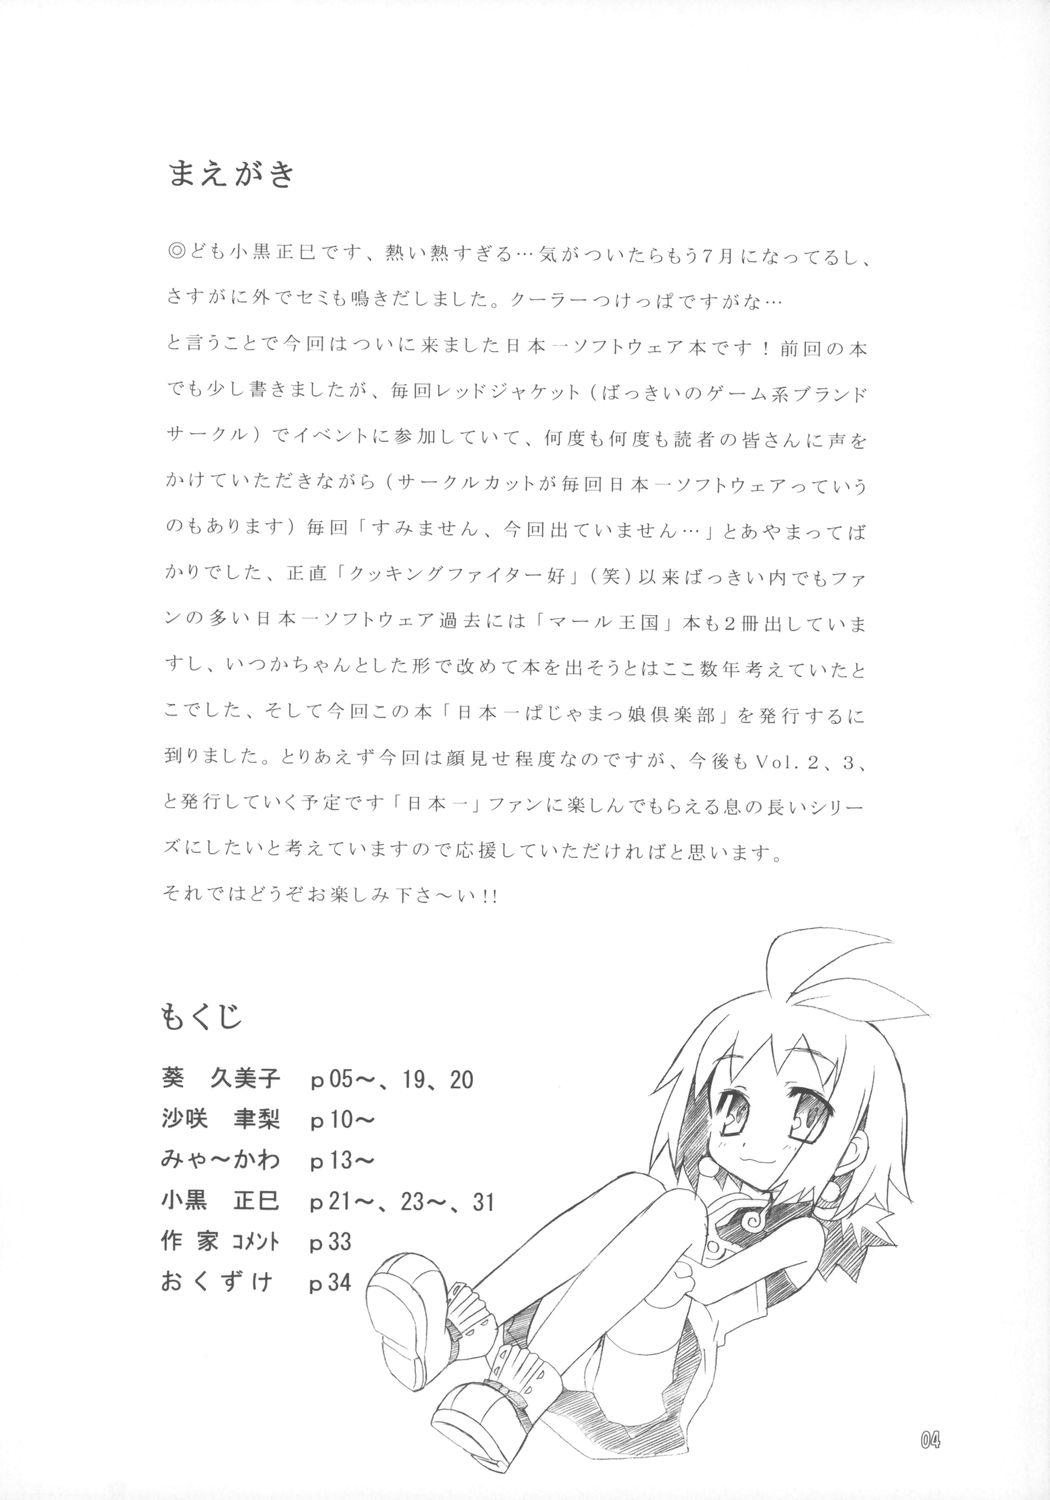 Twinks Nipponichi Pajamakko Club - Disgaea La pucelle Puppet princess of marl kingdom Phantom brave Penetration - Page 3